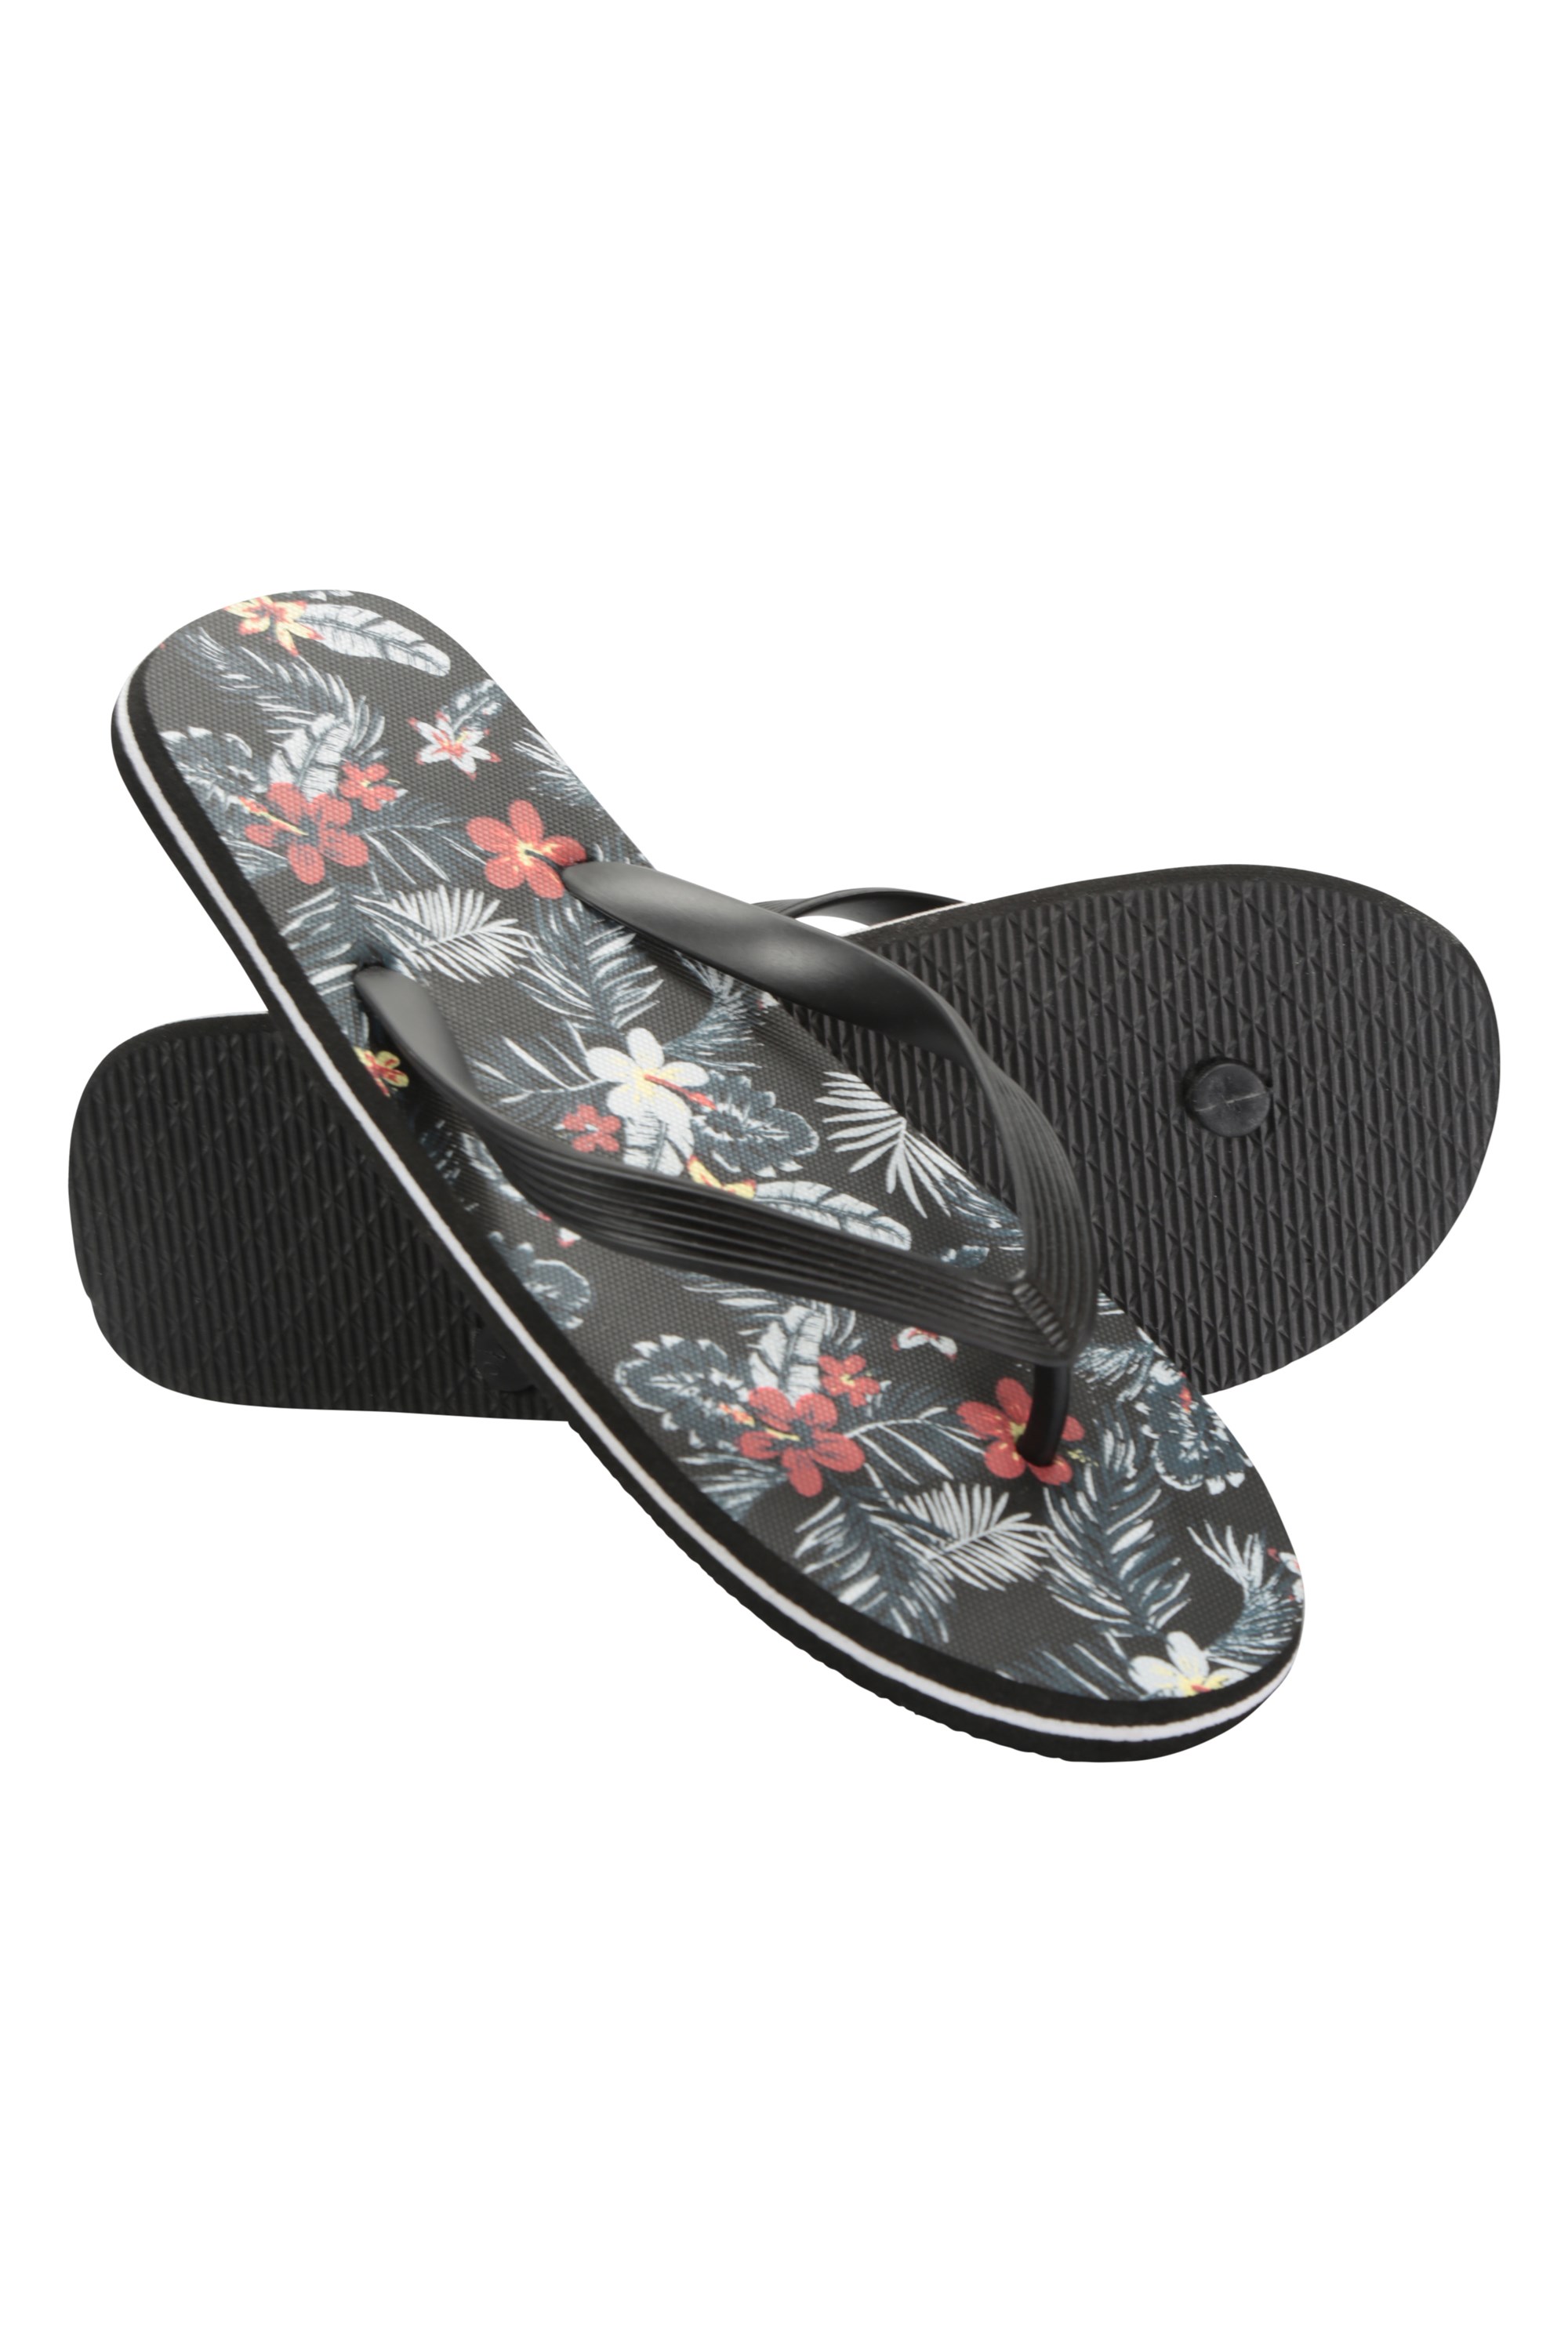 Women's Floral Patterned Flip Flops Beach Sport Sandals